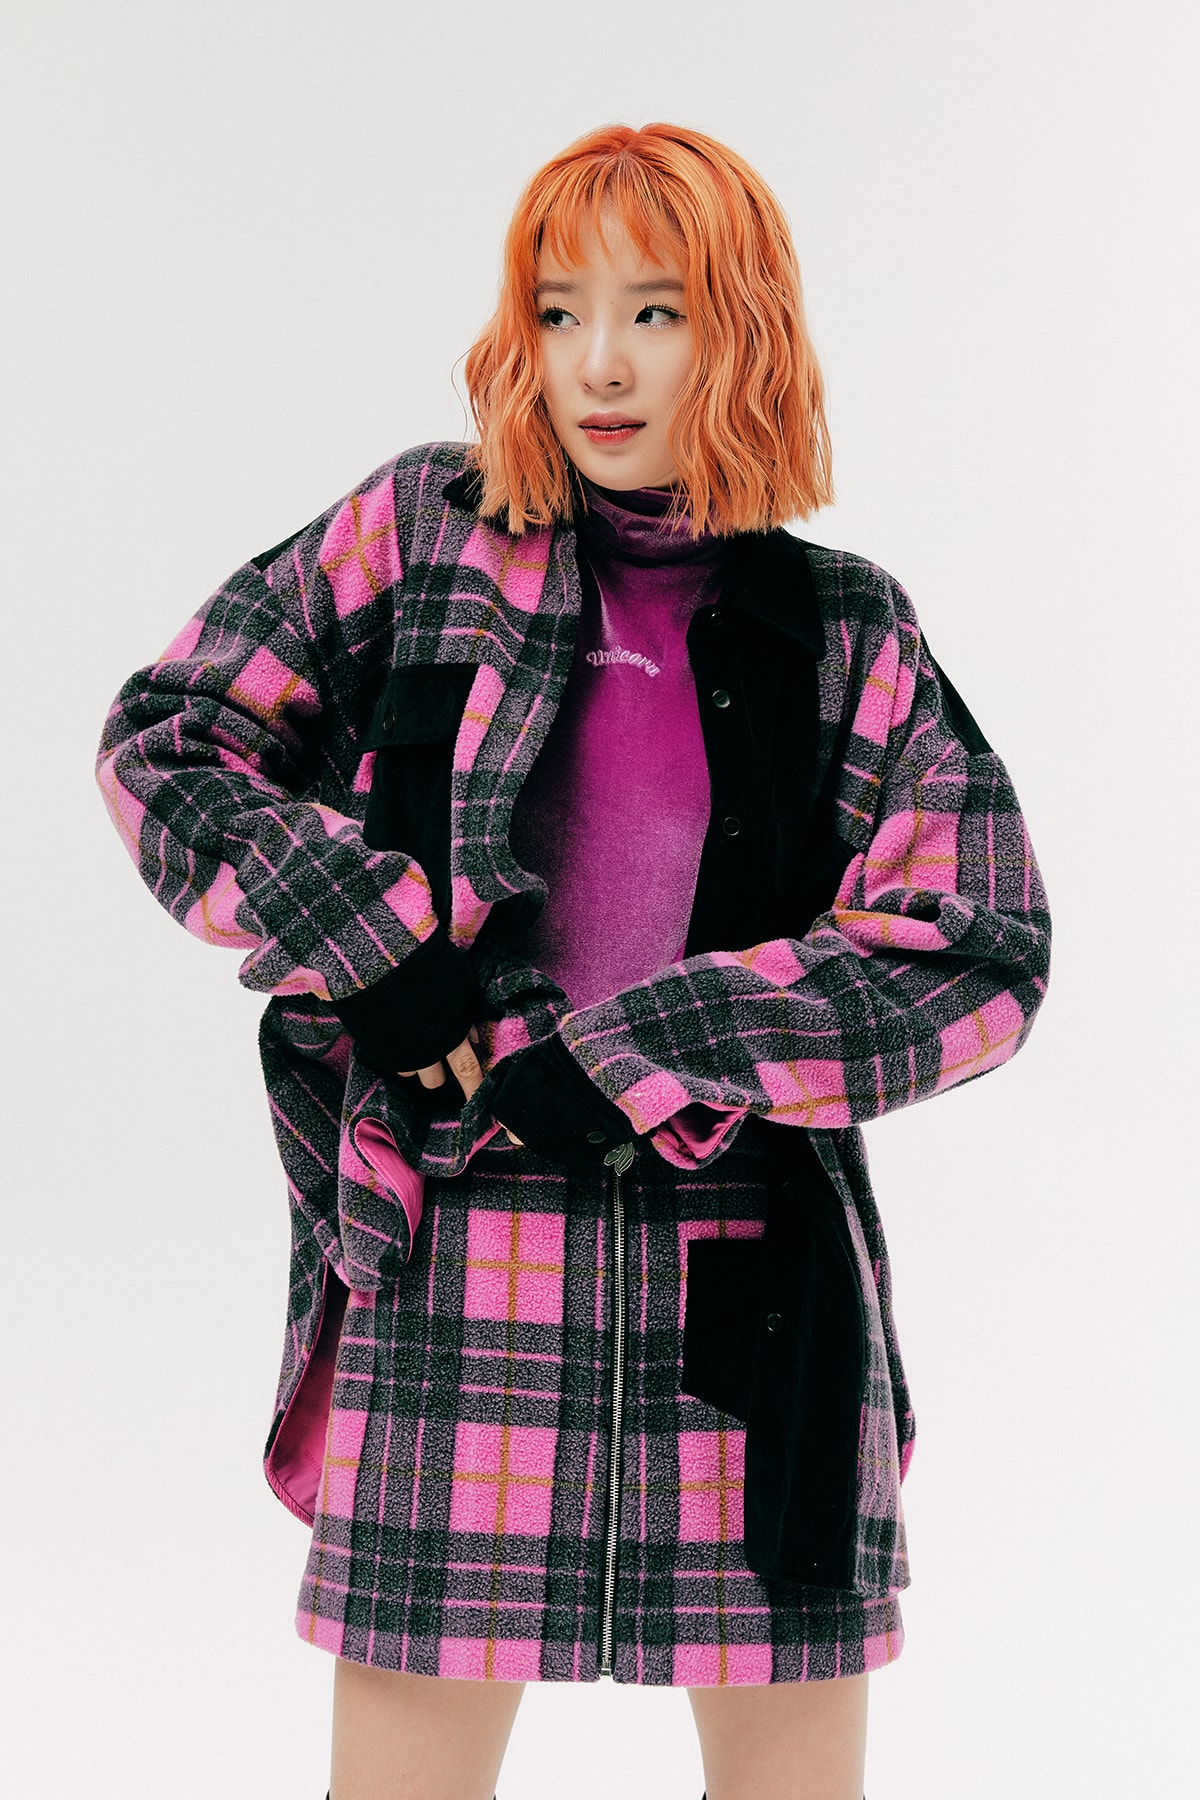 IRENEISGOOD Label Fall/Winter 2020 Collection Lookbook Plaid Jacket Skirt Pink